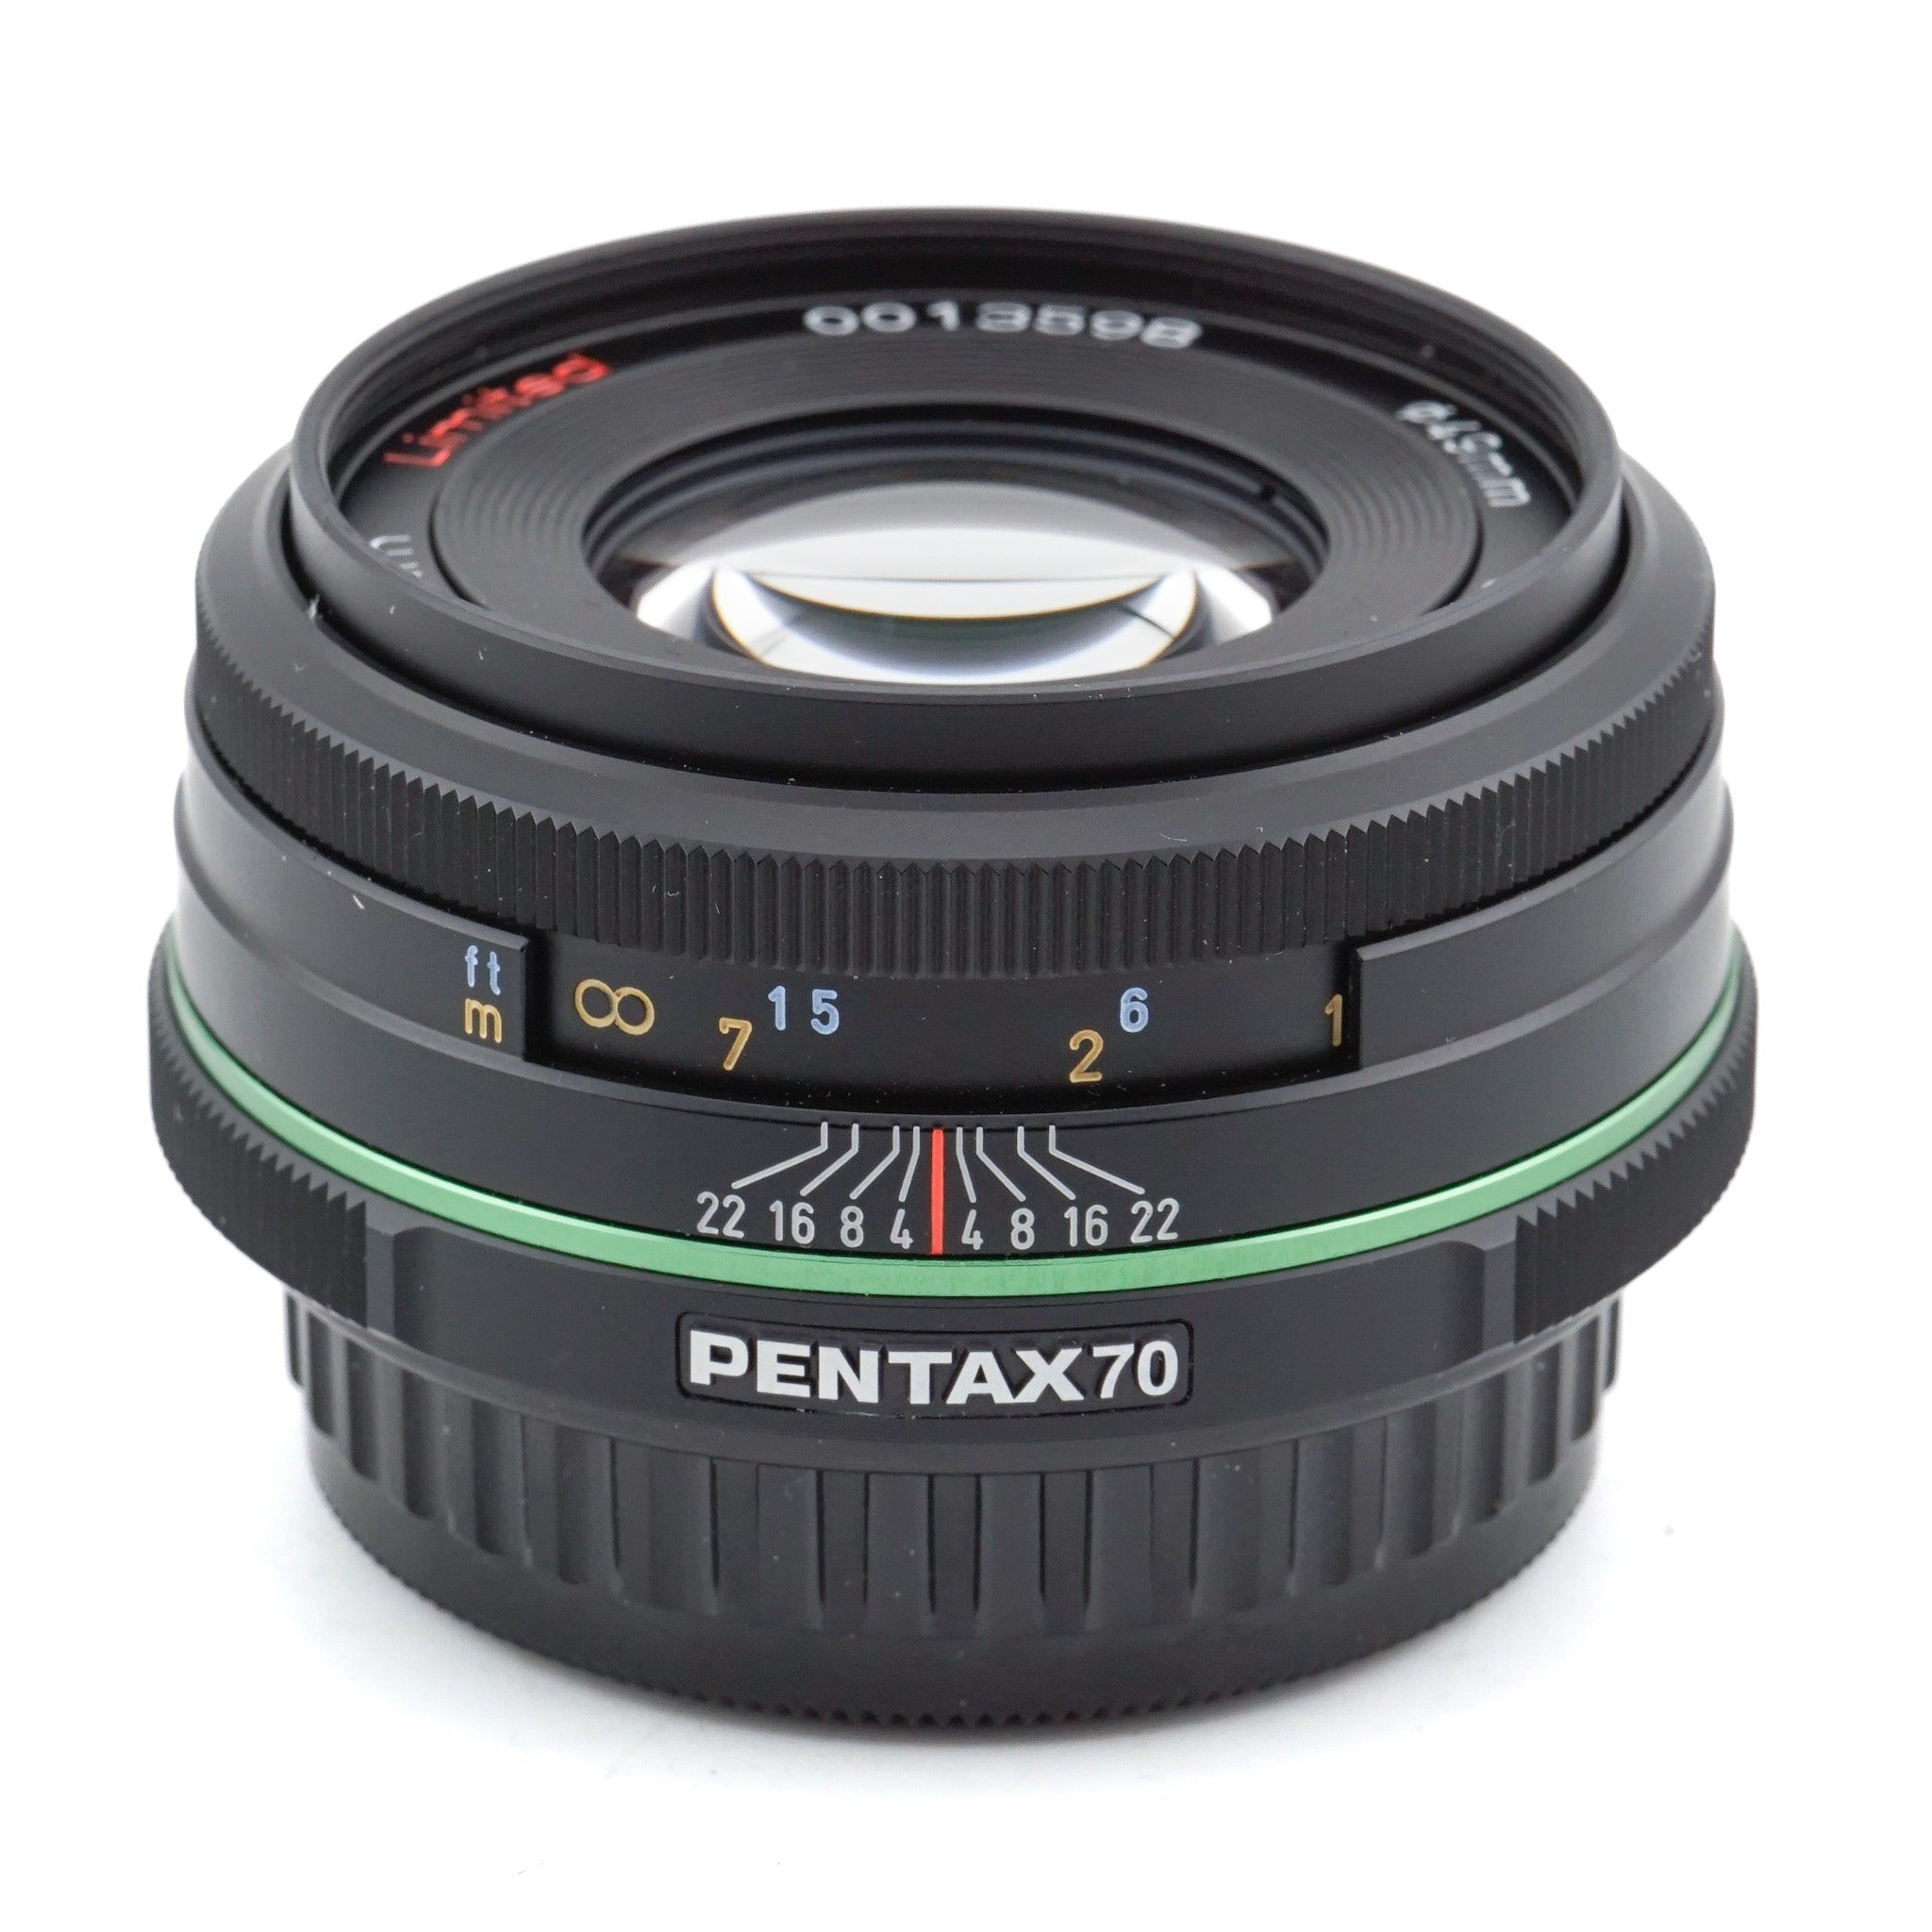 Pentax 70mm f2.4 Limited SMC Pentax-DA - Lens